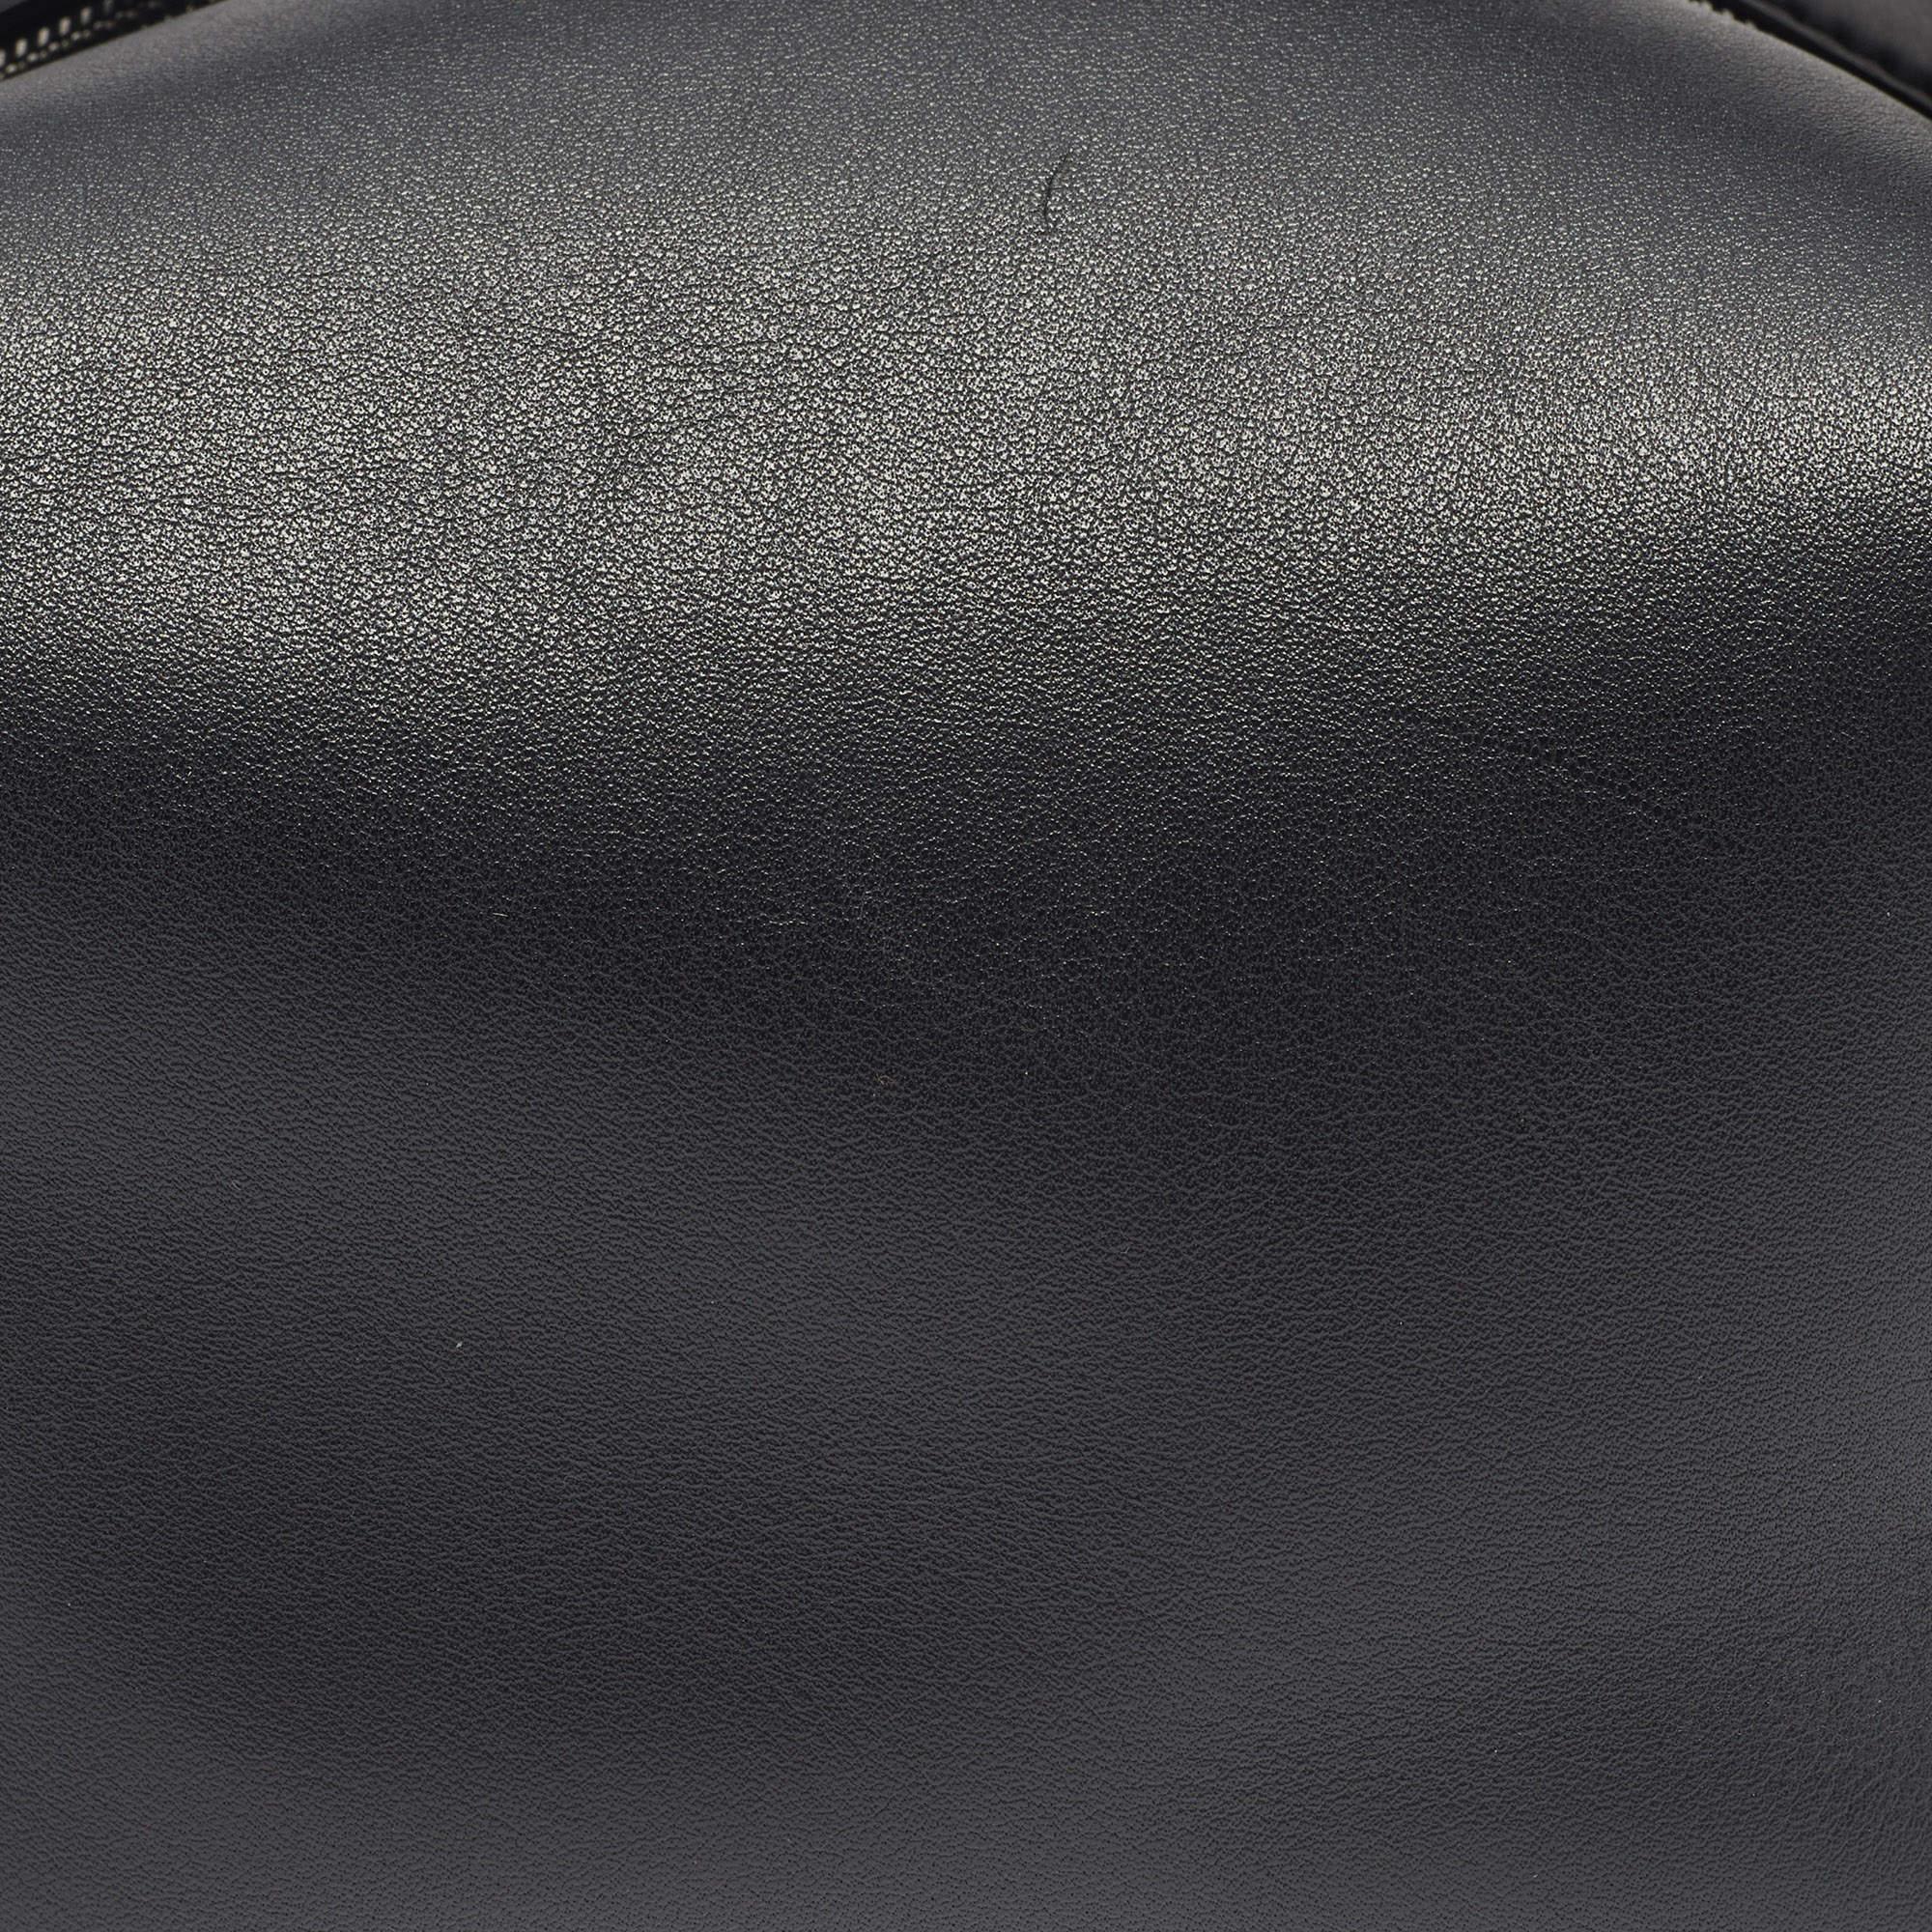 The Row Black Leather Les Bains Clutch Bag 4